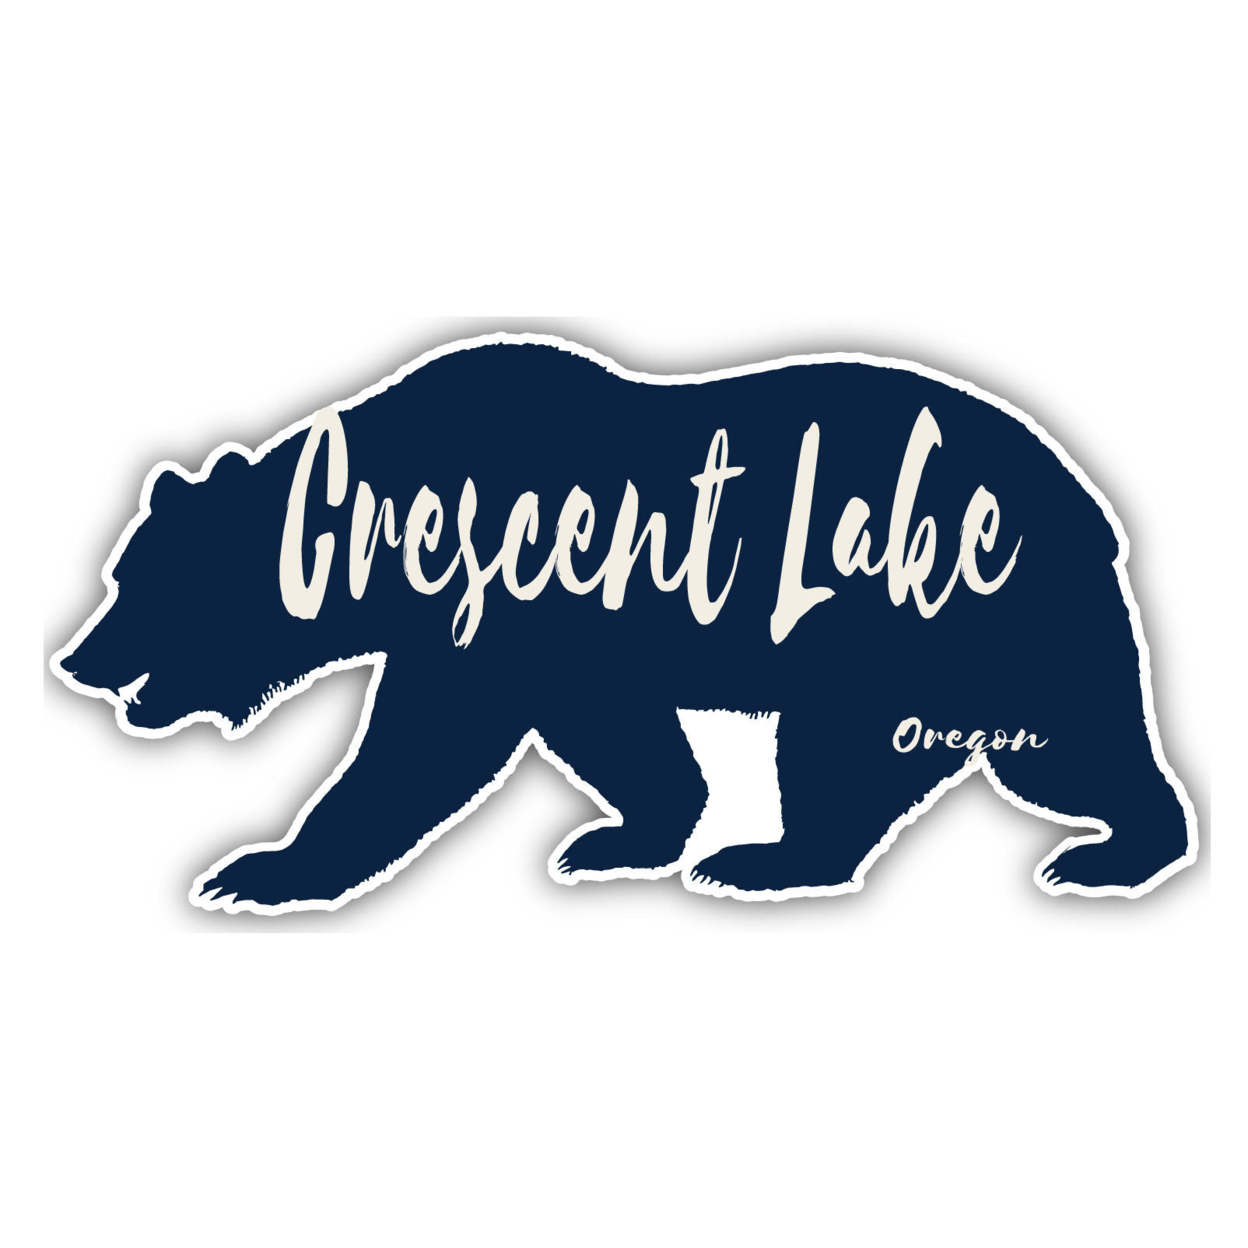 Crescent Lake Oregon Souvenir Decorative Stickers (Choose Theme And Size) - 4-Pack, 2-Inch, Bear